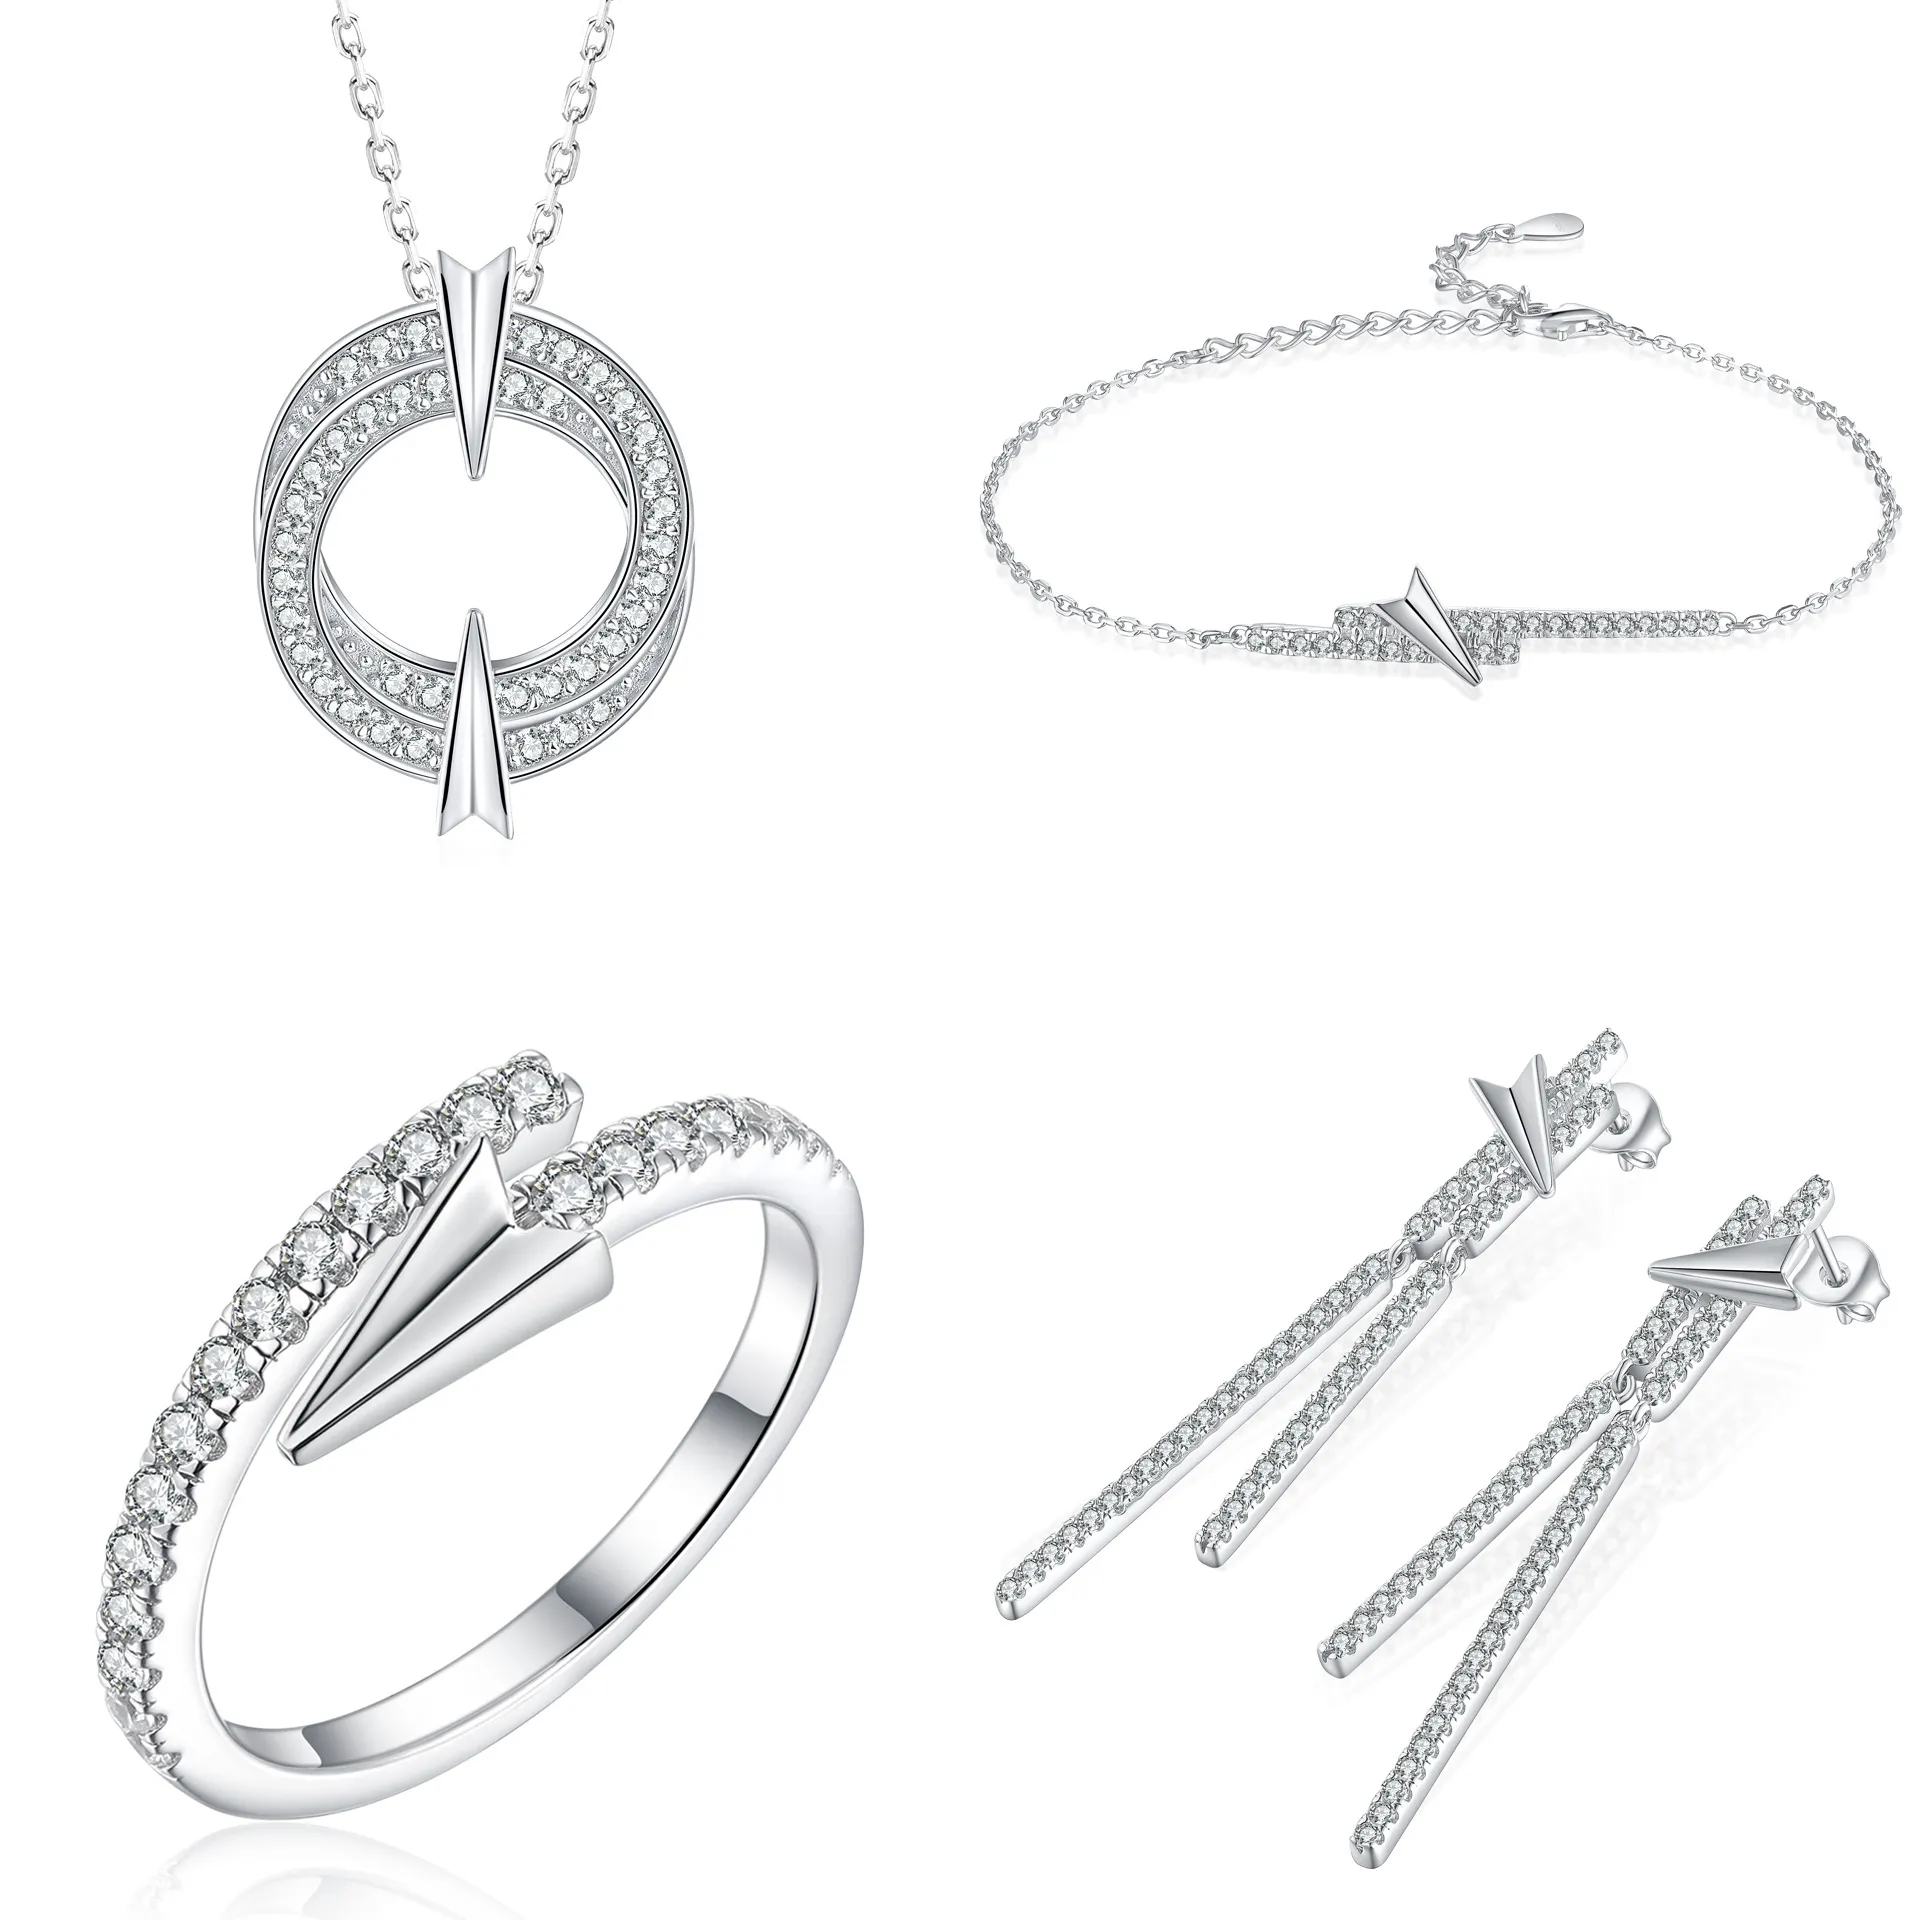 Jewelry Sets, S925 Sterling Silver Boutique, 4-piece Women's Jewelry Bracelet, Earrings, Necklace, Ring Set,Jewelry